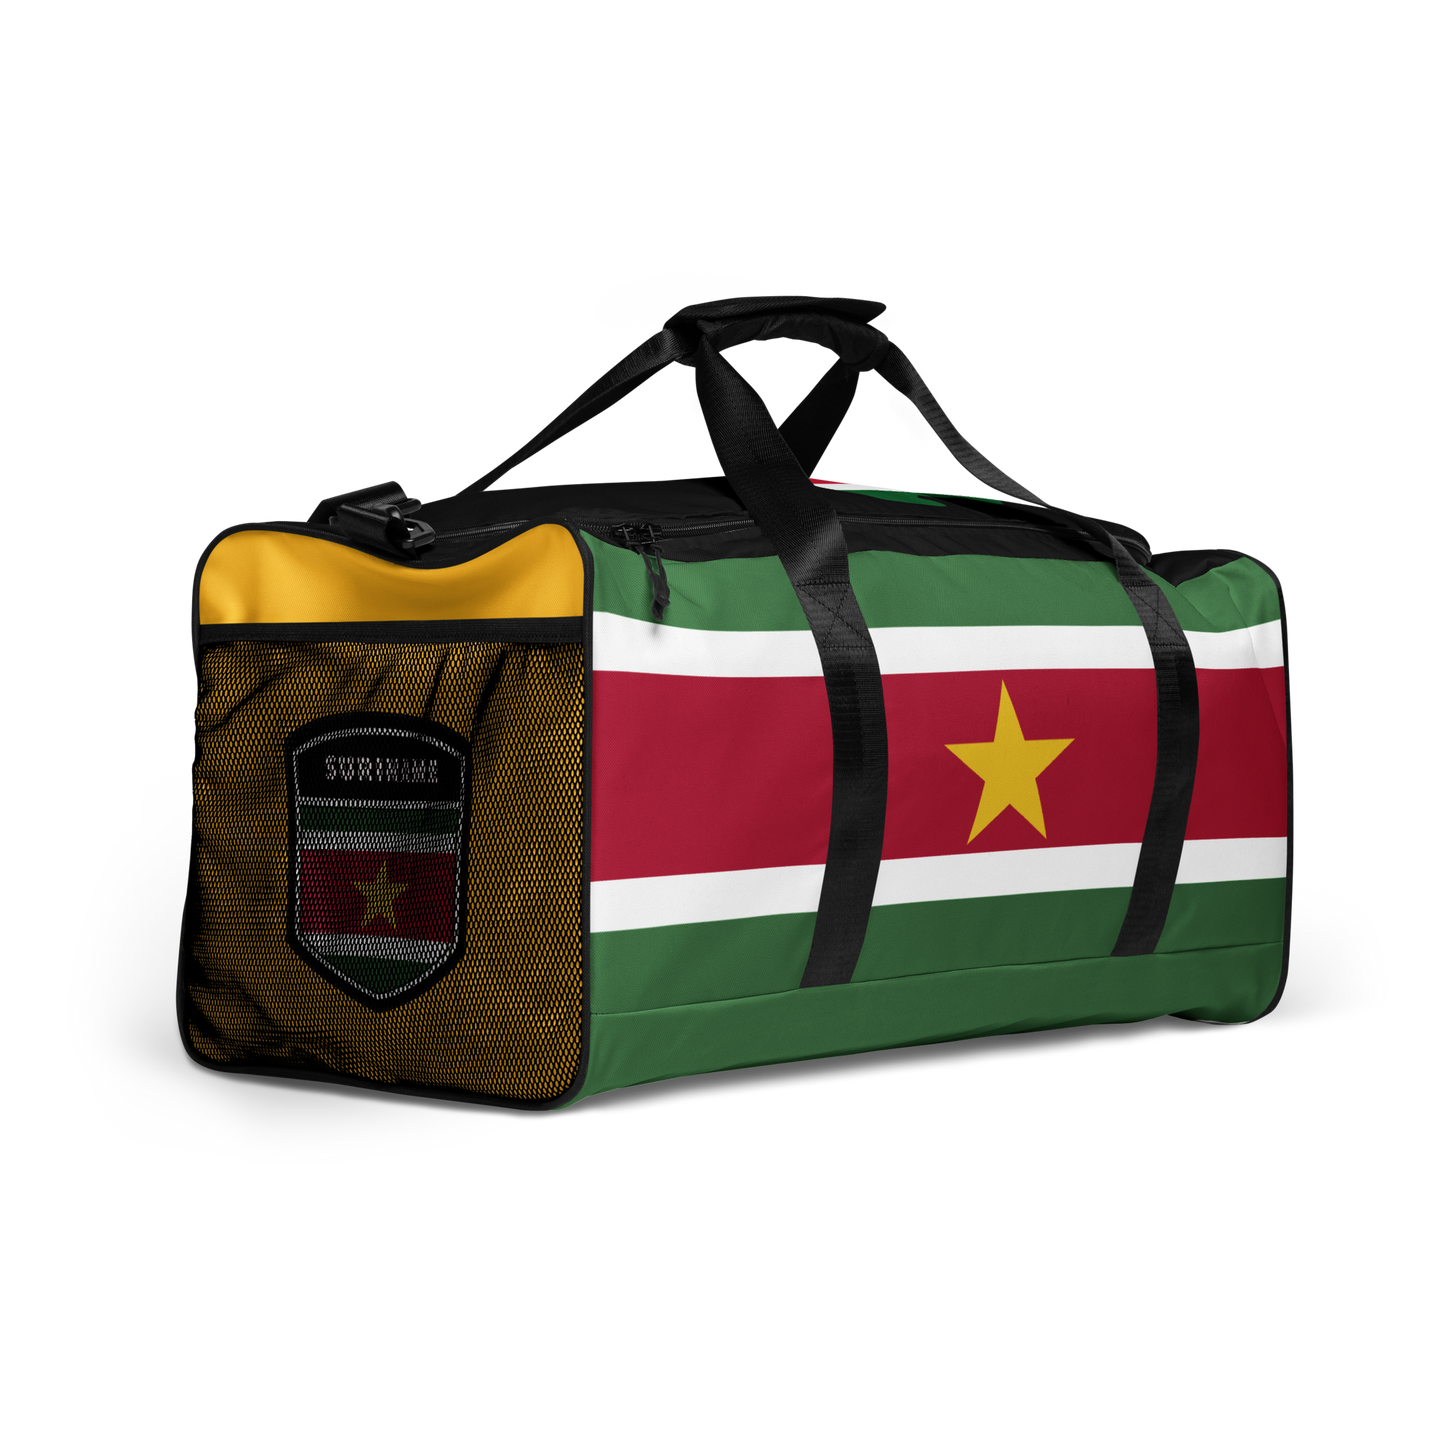 Suriname Duffle bag